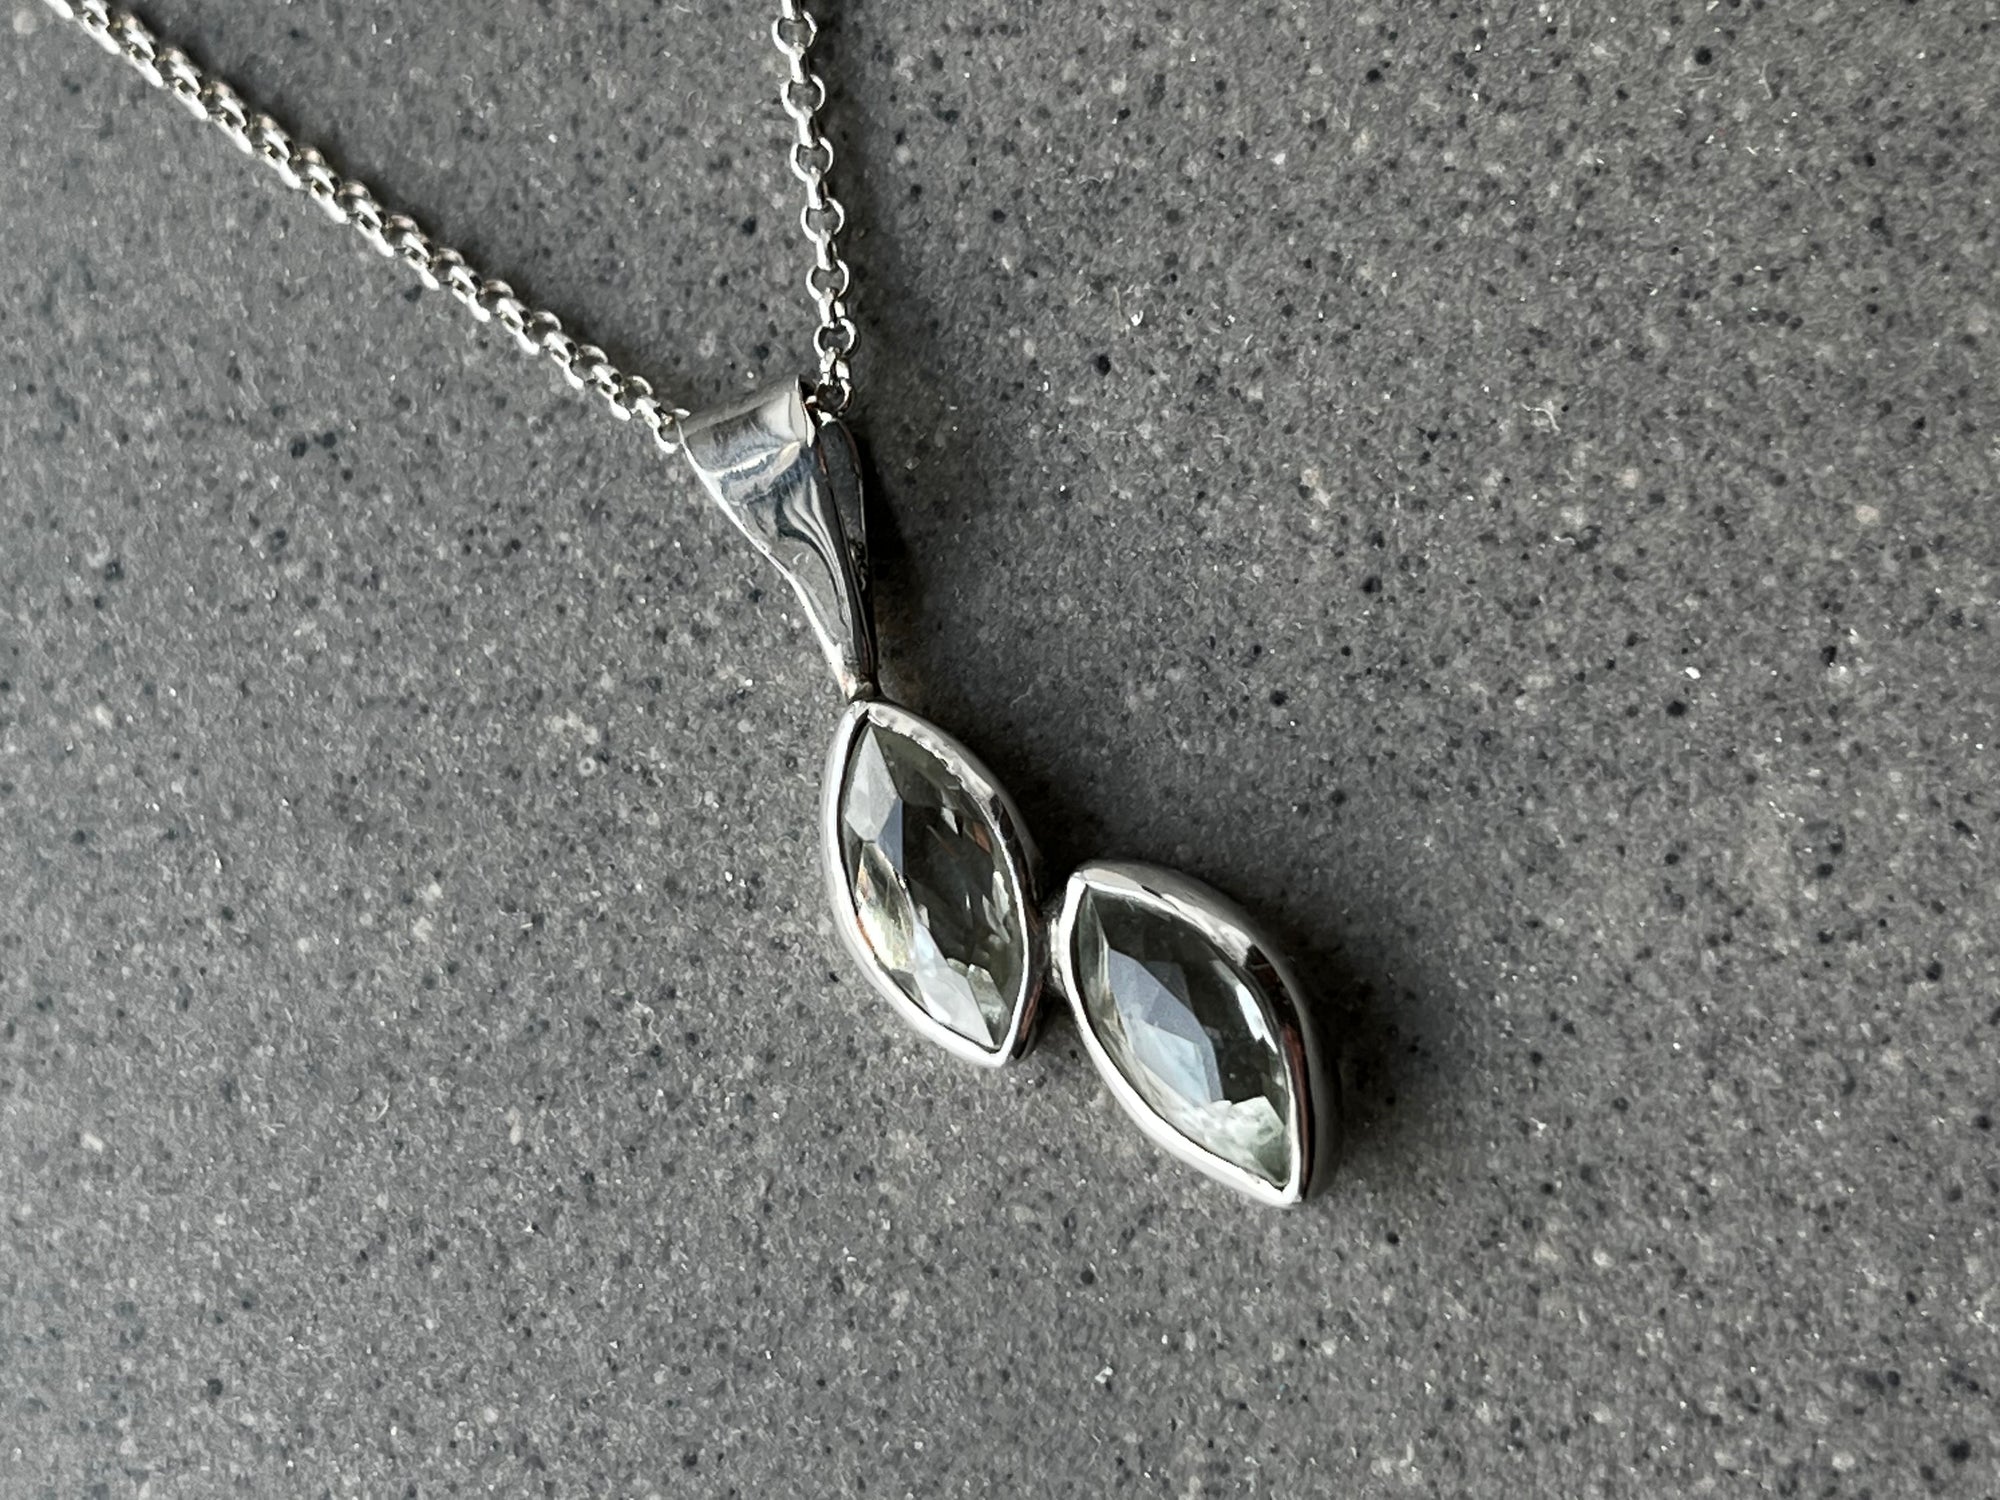 Green Amethyst Silver Pendant Necklace